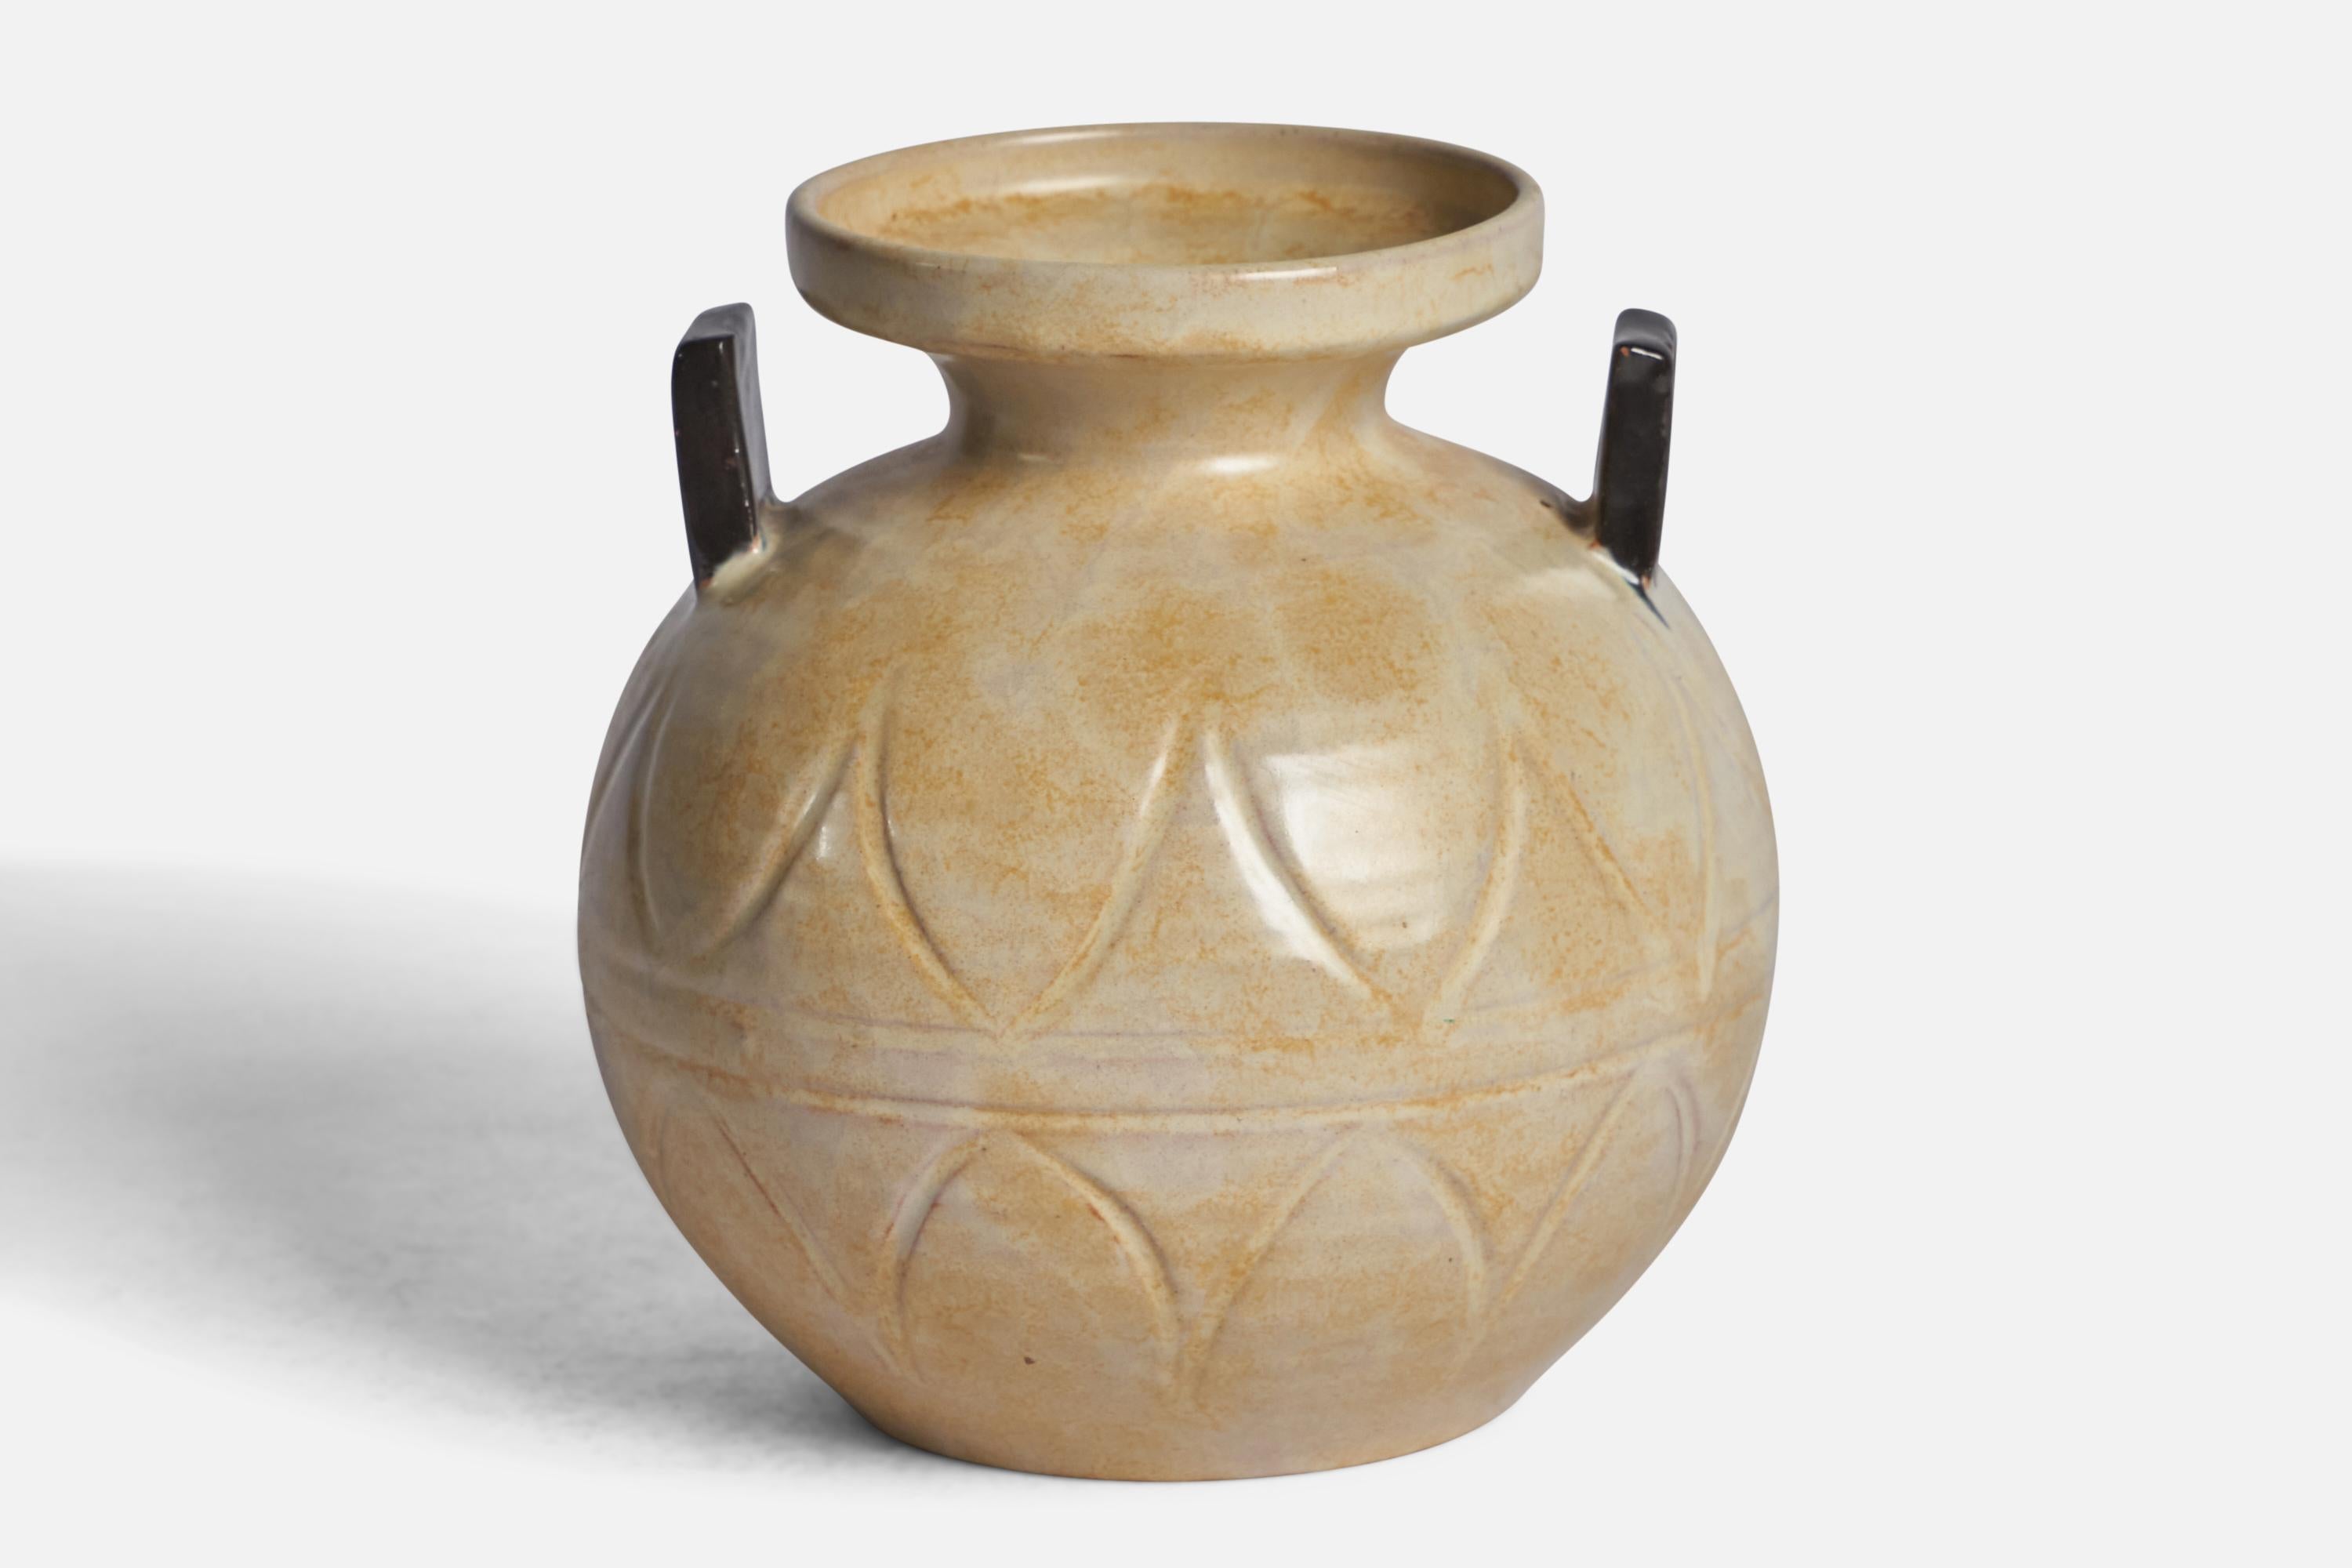 A beige and black-glazed incised earthenware vase designed and produced by Upsala Ekeby, Sweden, 1930s.